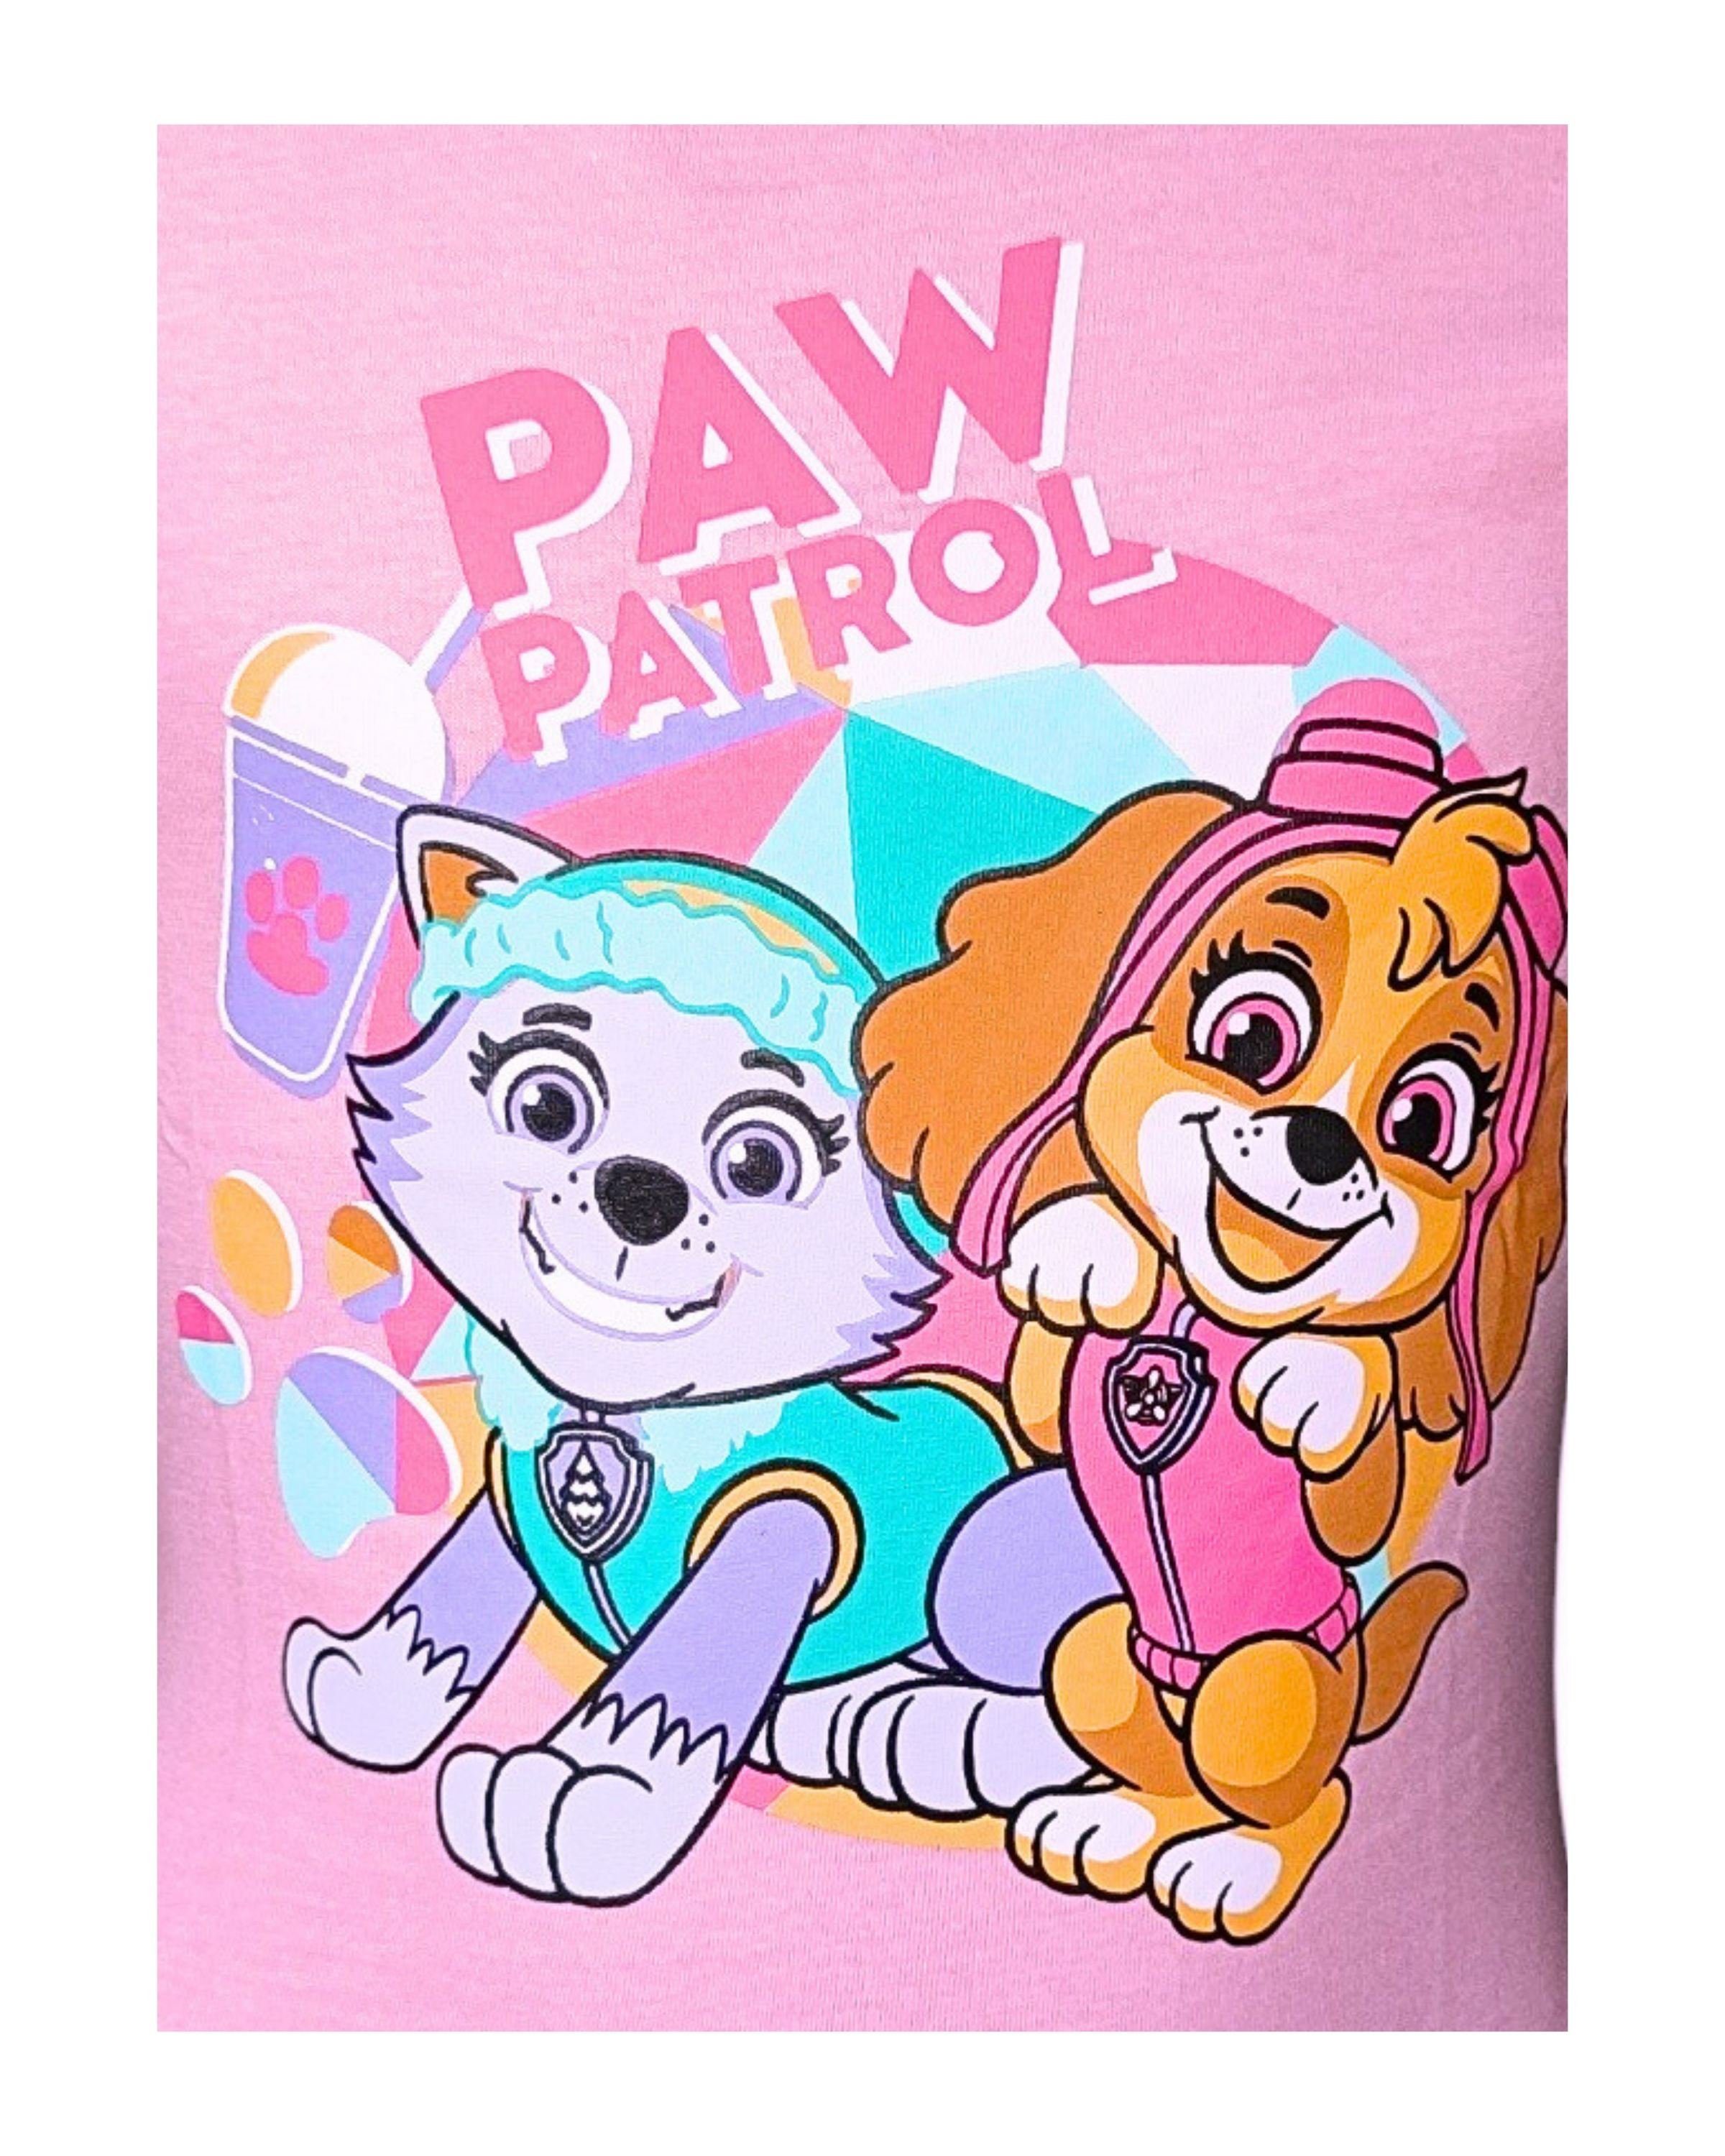 PAW PATROL T-Shirt Baumwolle Rosa 128 Skye cm & Kurzarmshirt - Mädchen Everest Gr. 98 aus